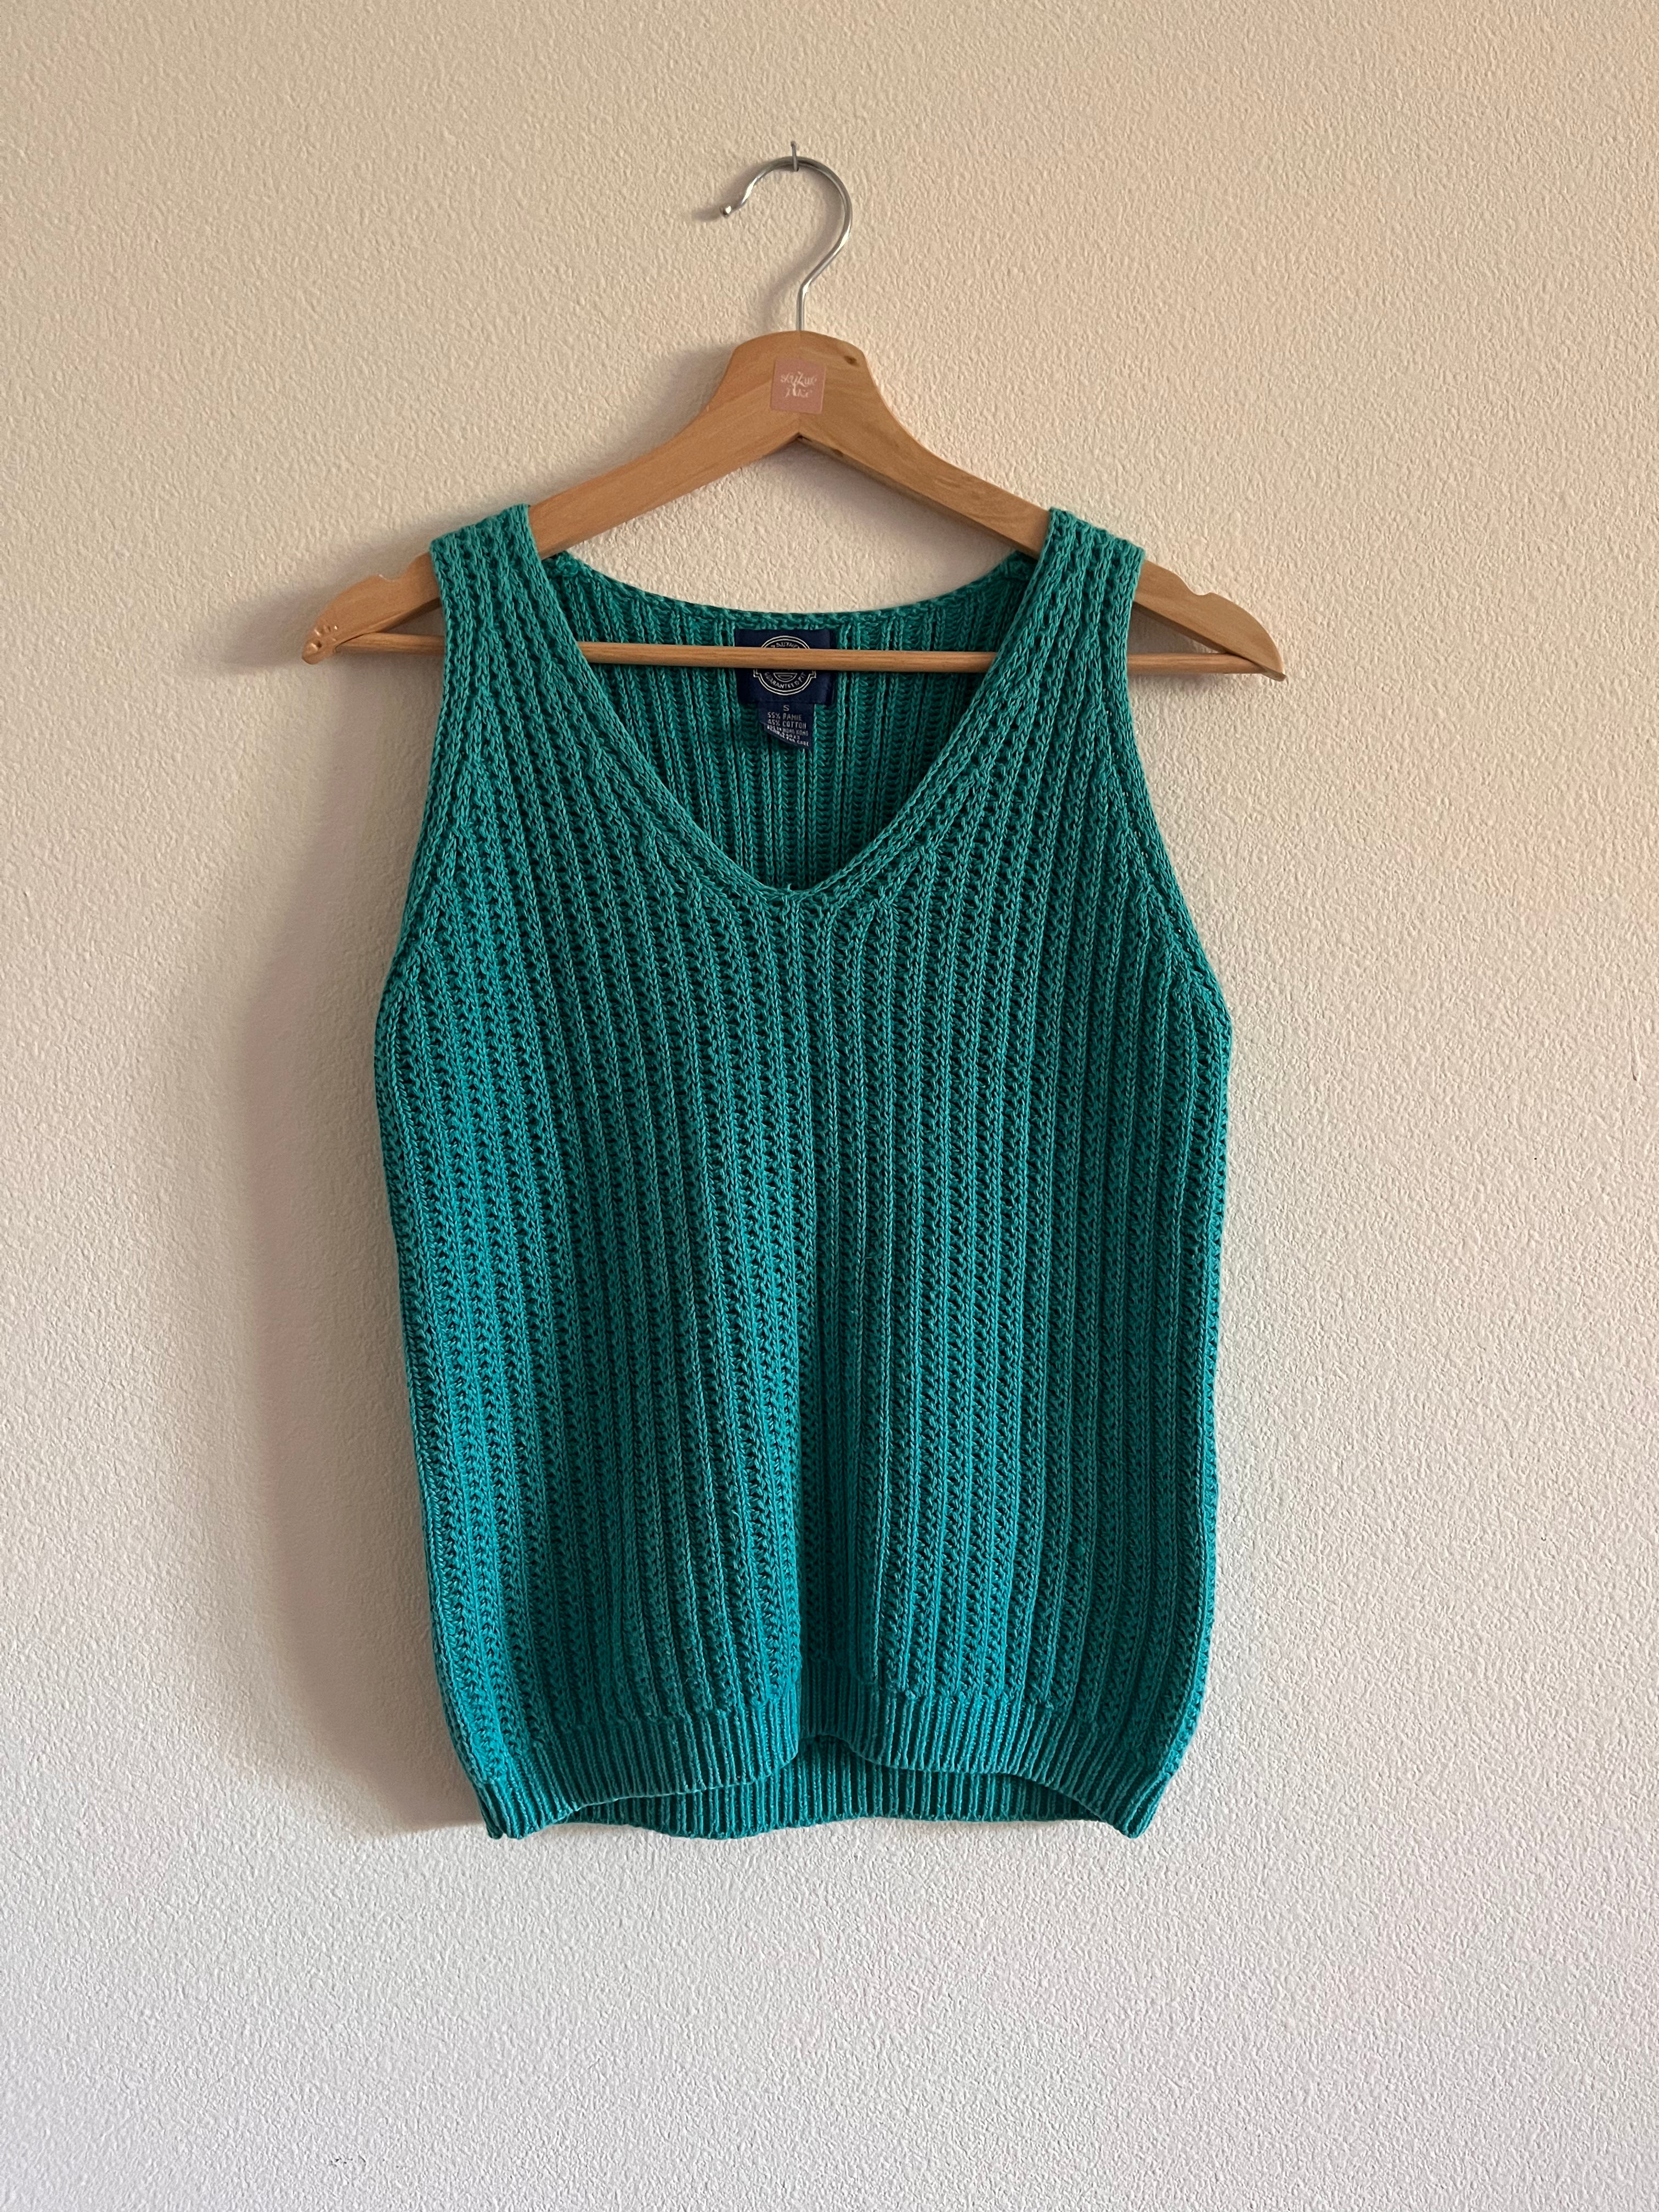 Emerald City Sweater Vest